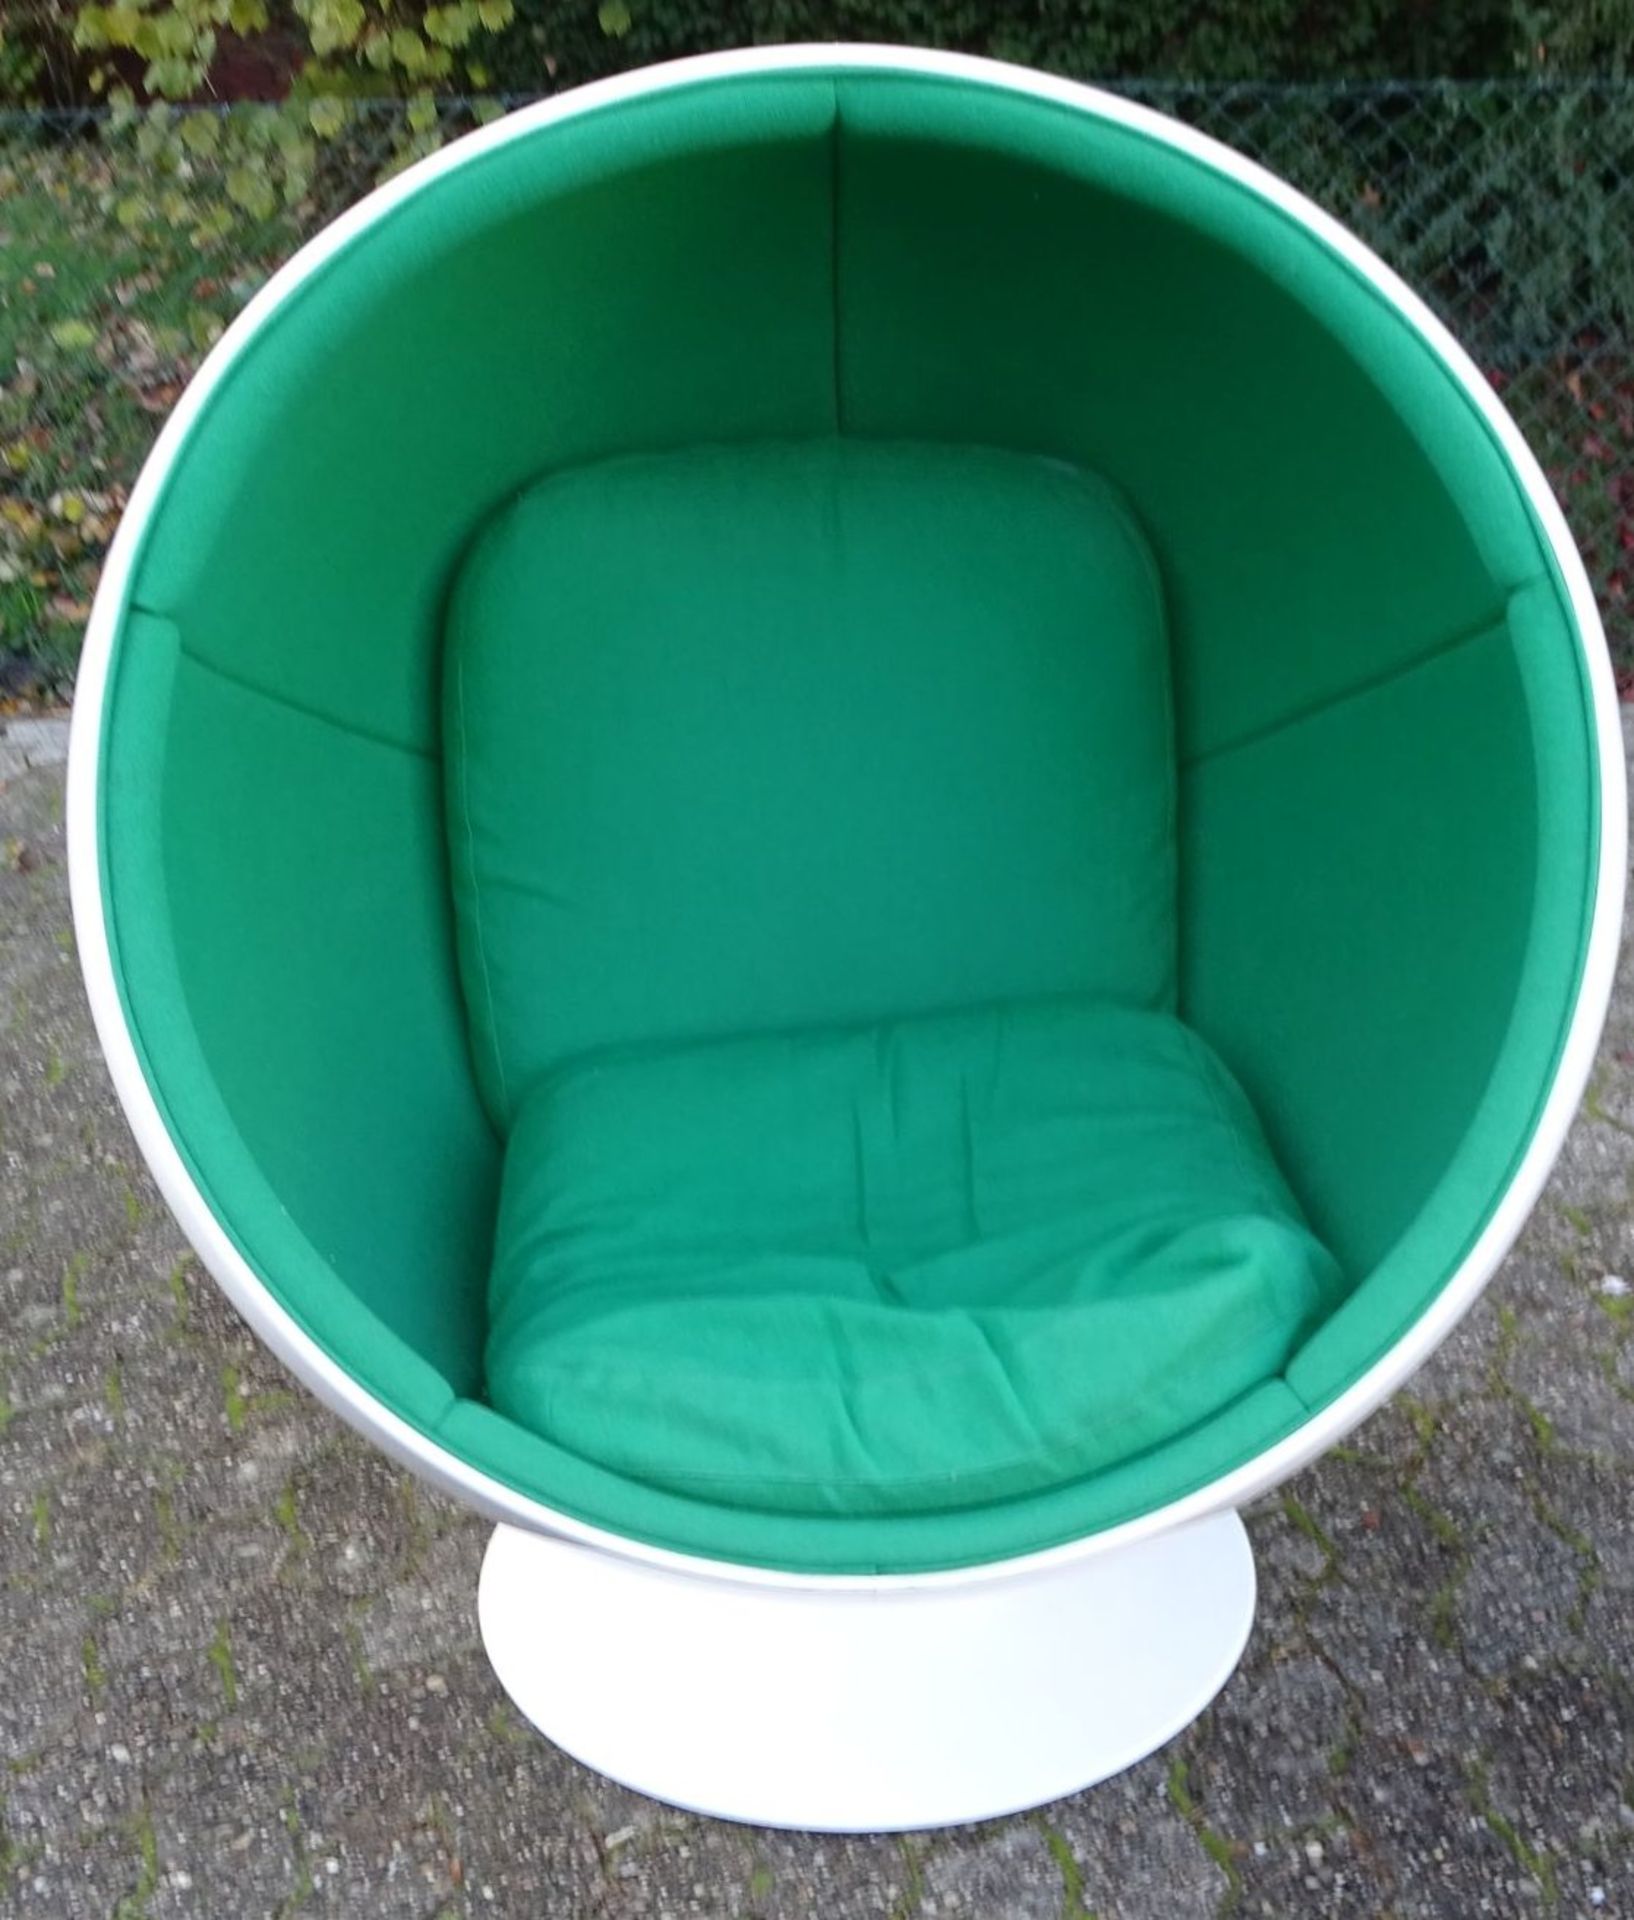 Eero Aarnio, Sessel 'Ball chair', 1963-65 Sessel , H. 125 cm, Ø 110 cm. Schild "Adelta ,made in